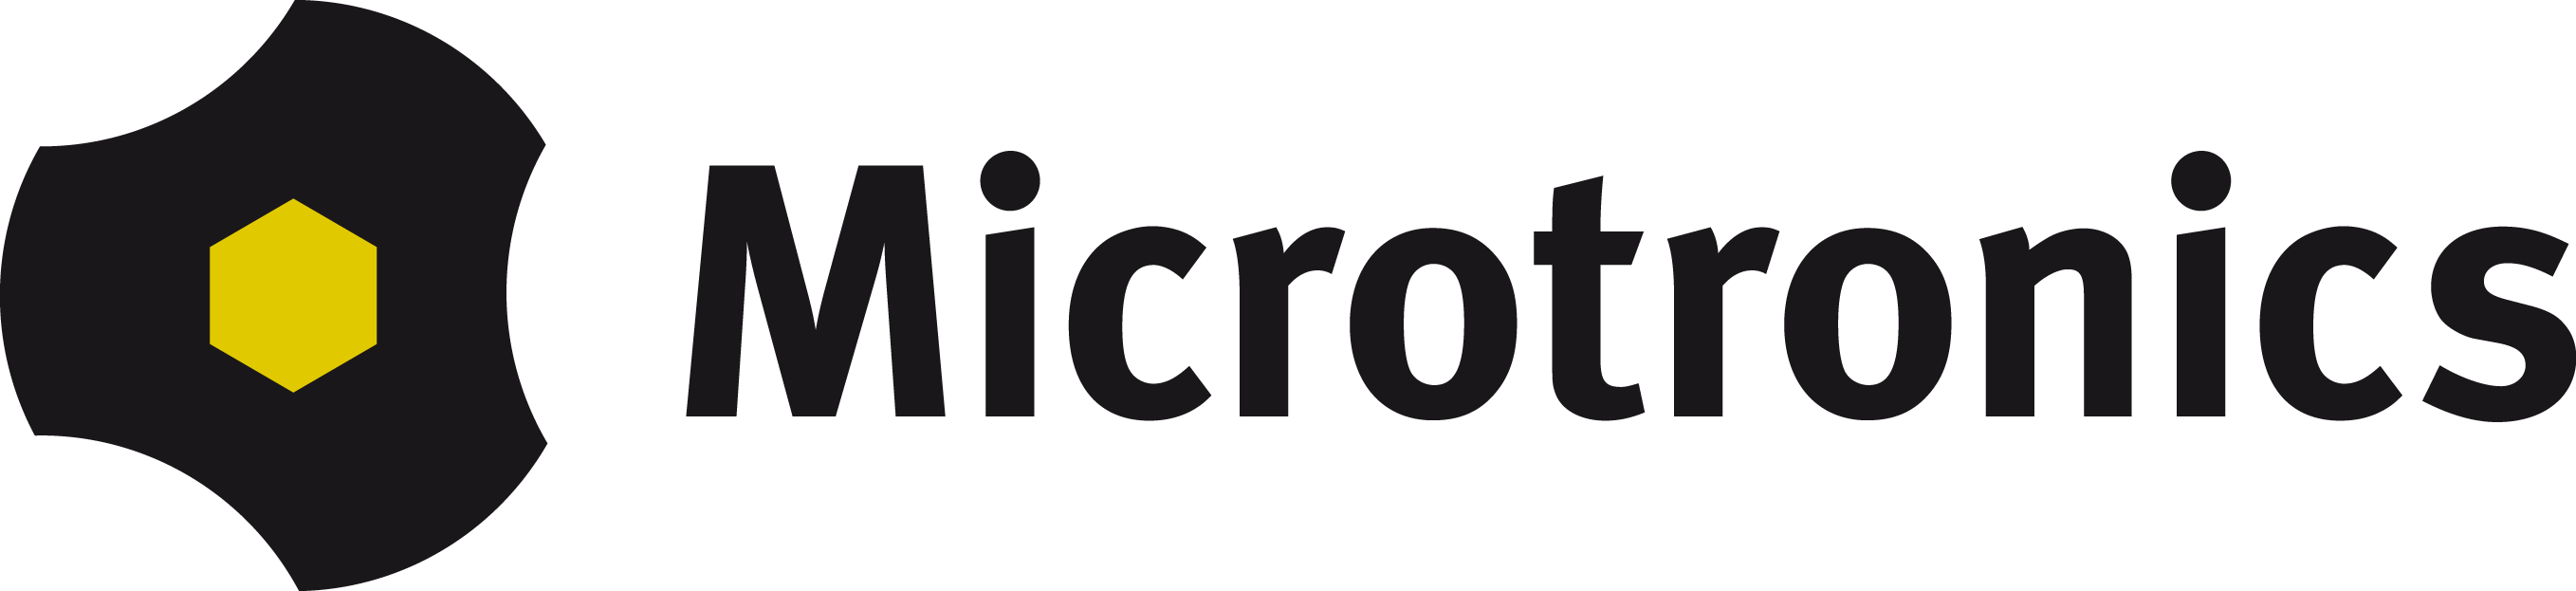 Microtronics Engineering GmbH_logo